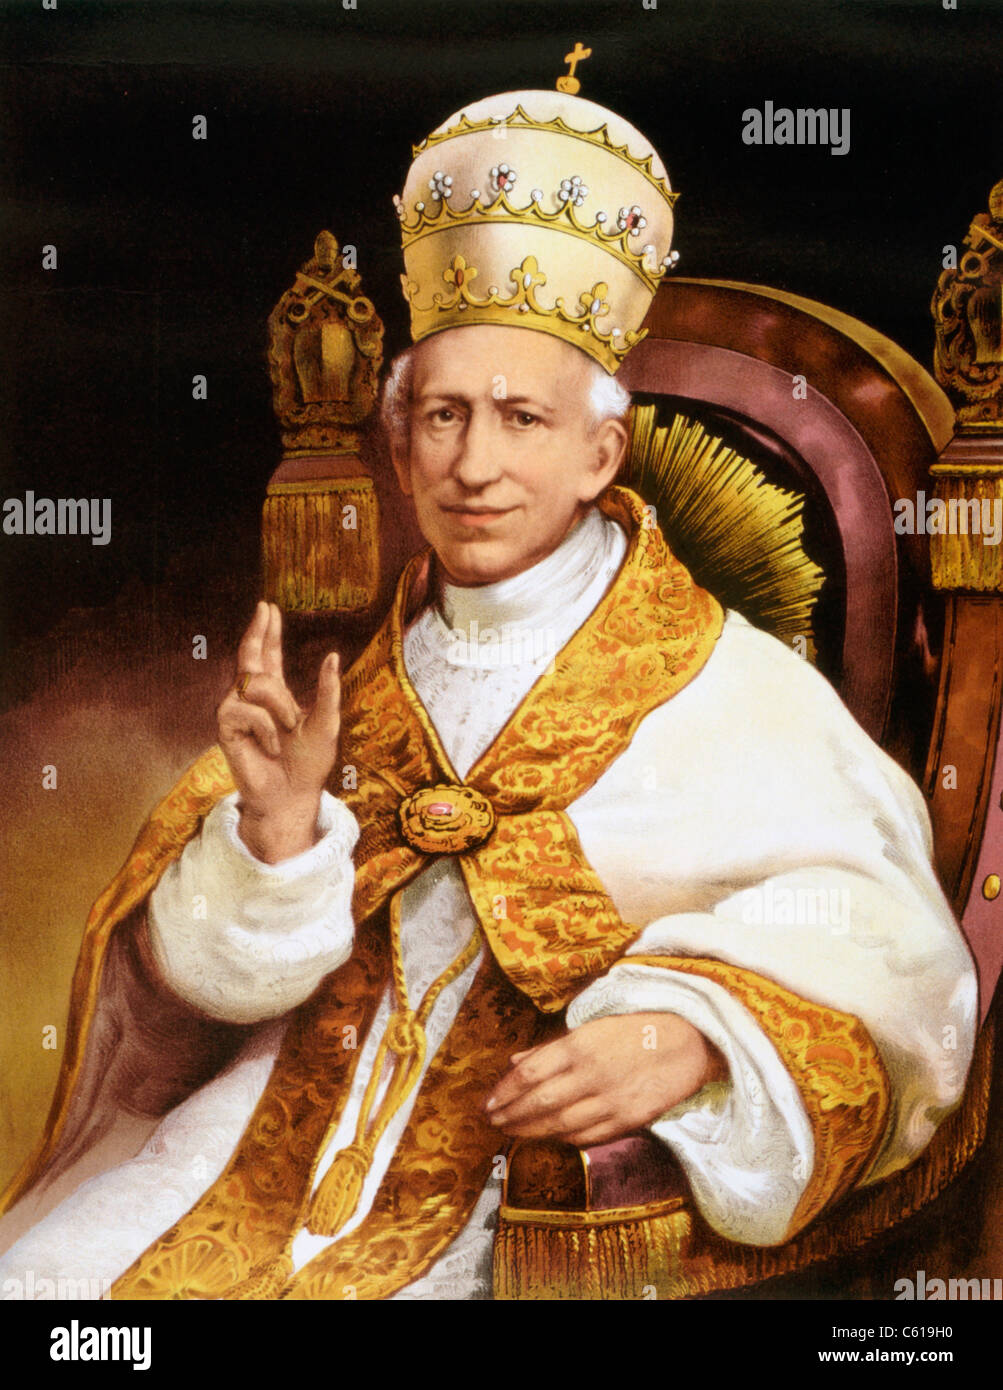 Pope Leo XII, 1810 – 1903. Born Vincenzo Gioacchino Raffaele Luigi Pecci in Italy. 256th Pope, reigning from 1878 to 1903. Stock Photo